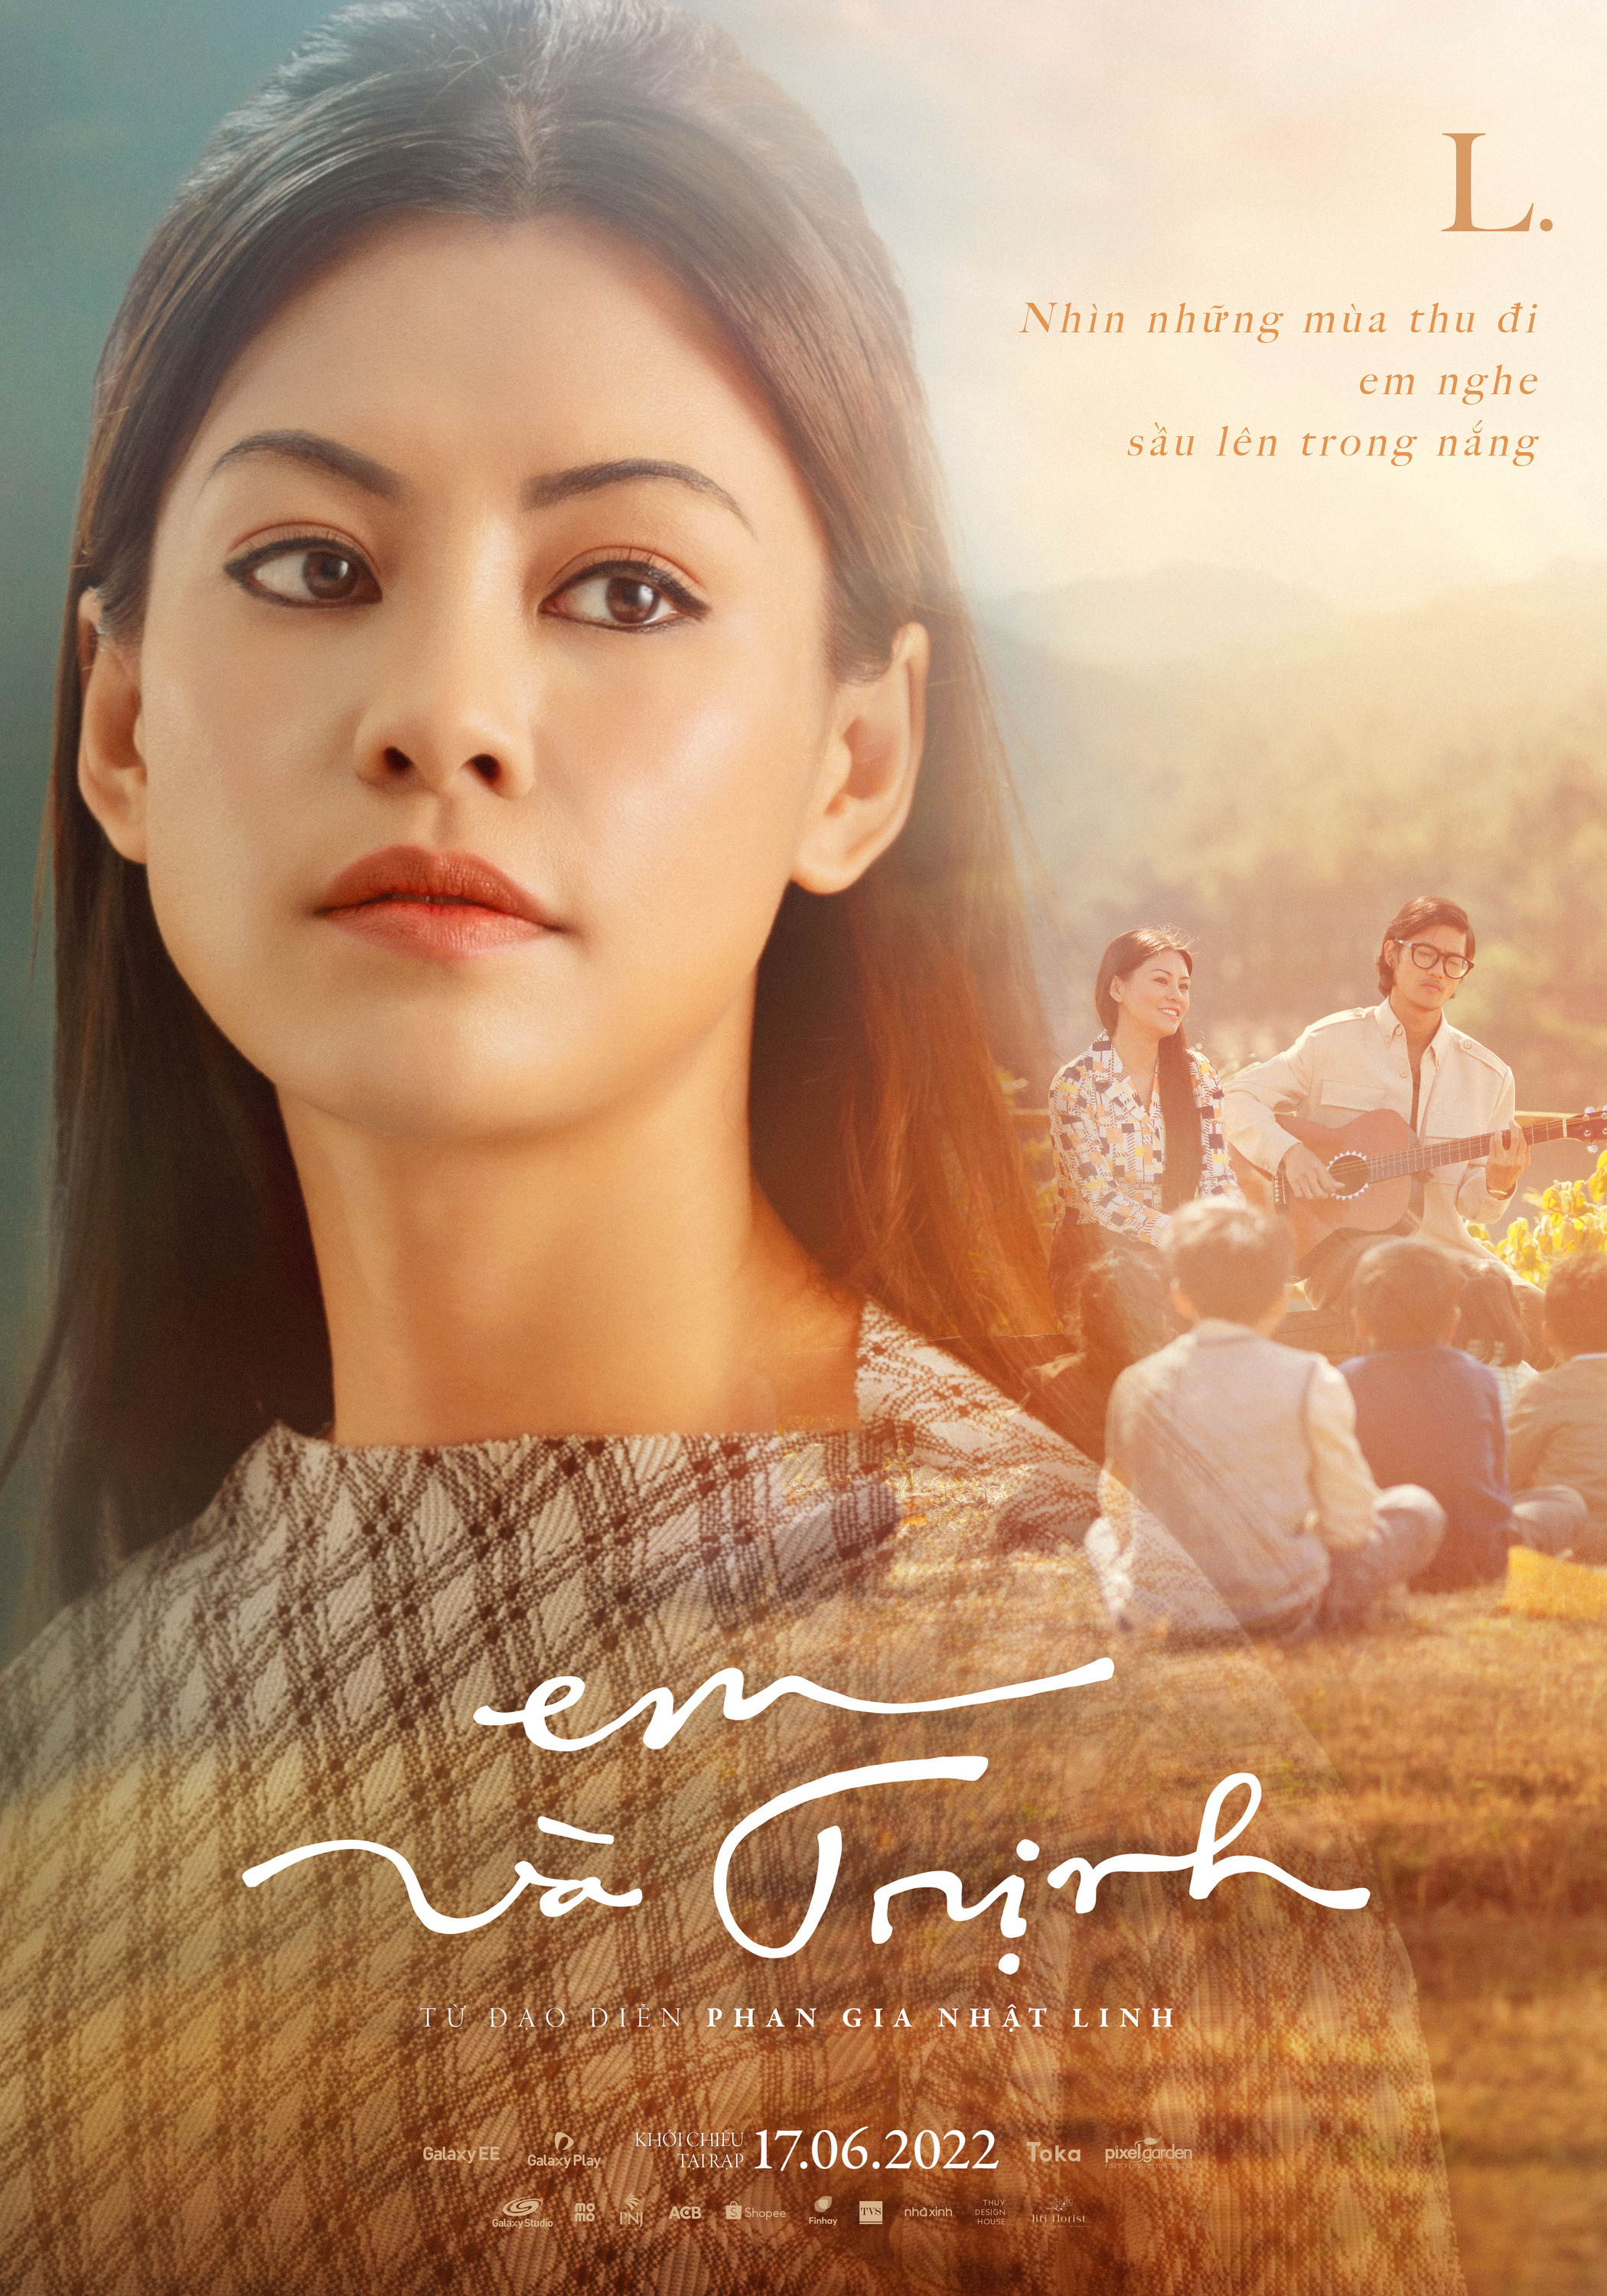 Mega Sized Movie Poster Image for Em Va Trinh (#13 of 19)